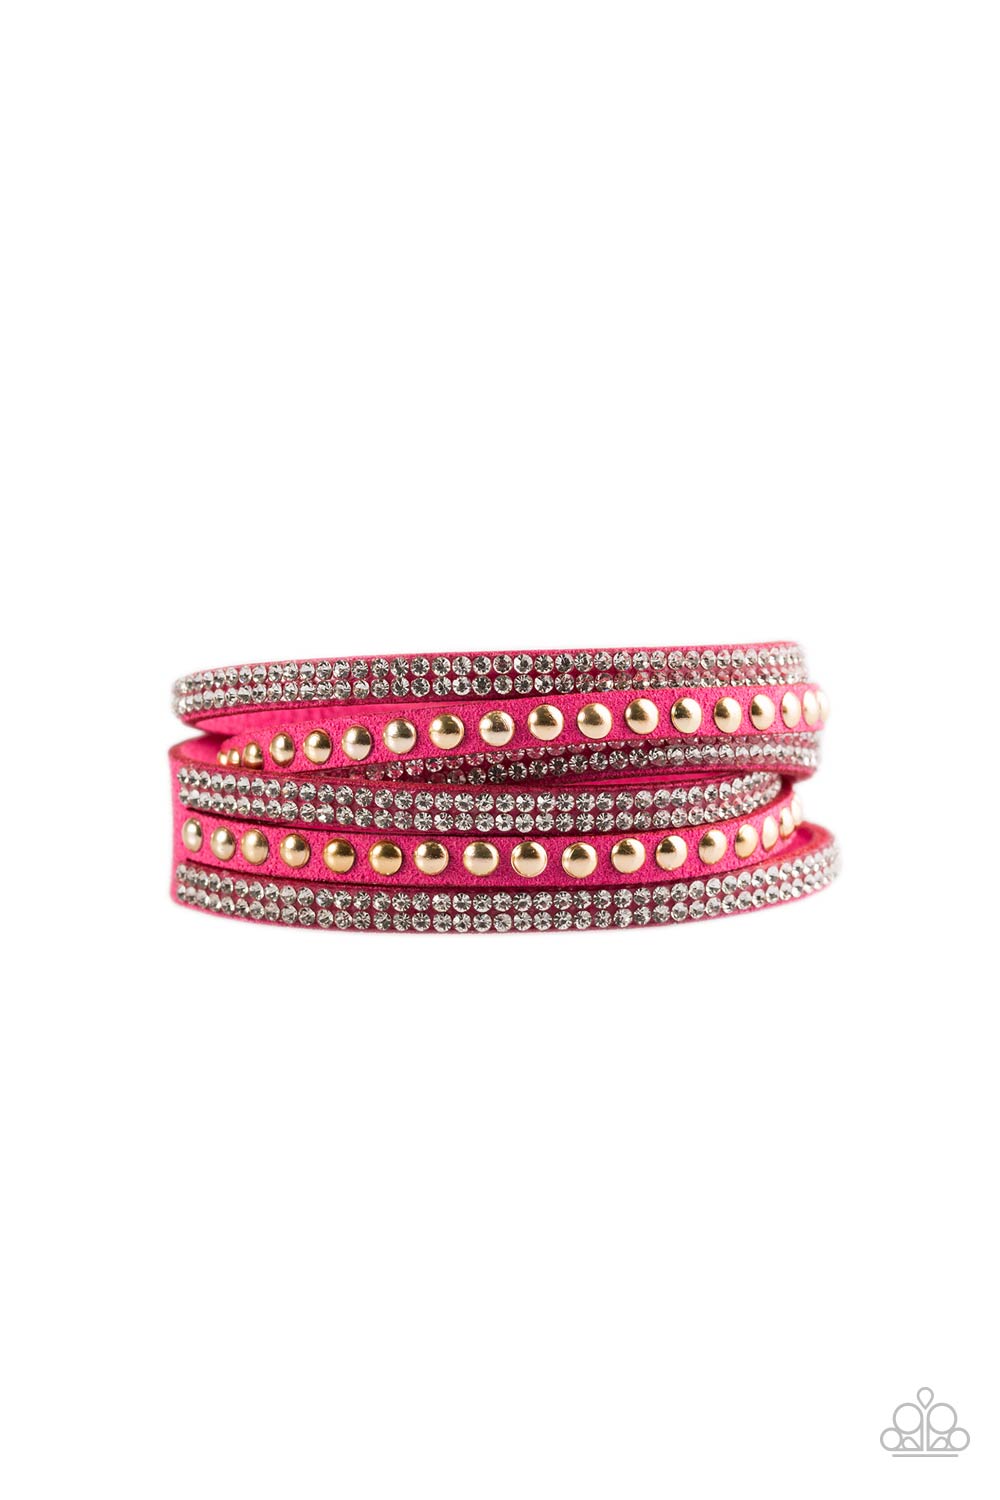 I BOLD You So! - Pink Urban Bracelet freeshipping - JewLz4u Gemstone Gallery